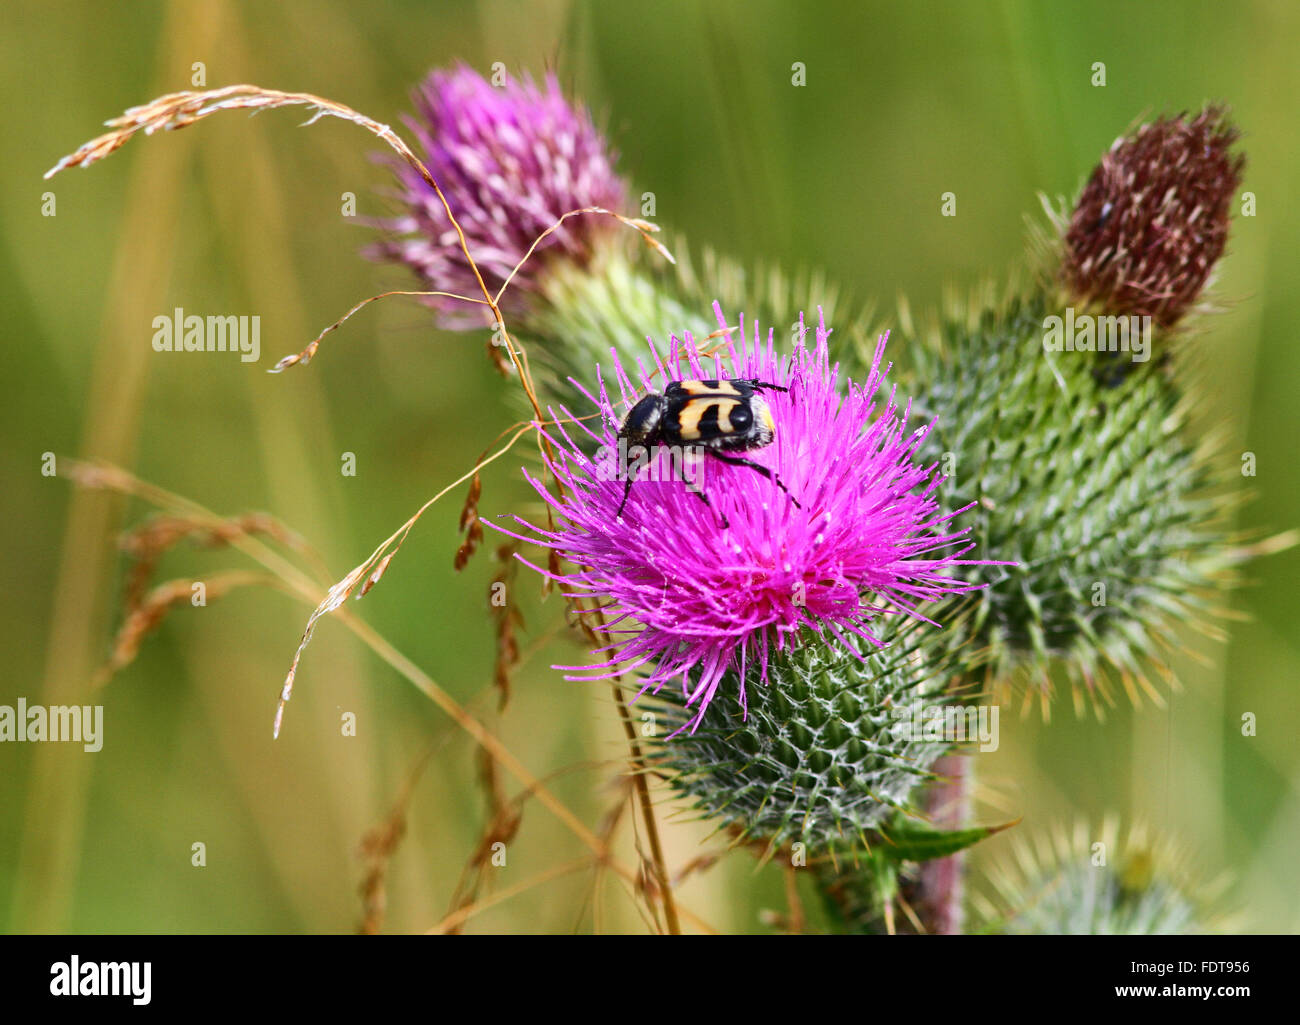 Eurasian bee-beetle on thistle flower Stock Photo